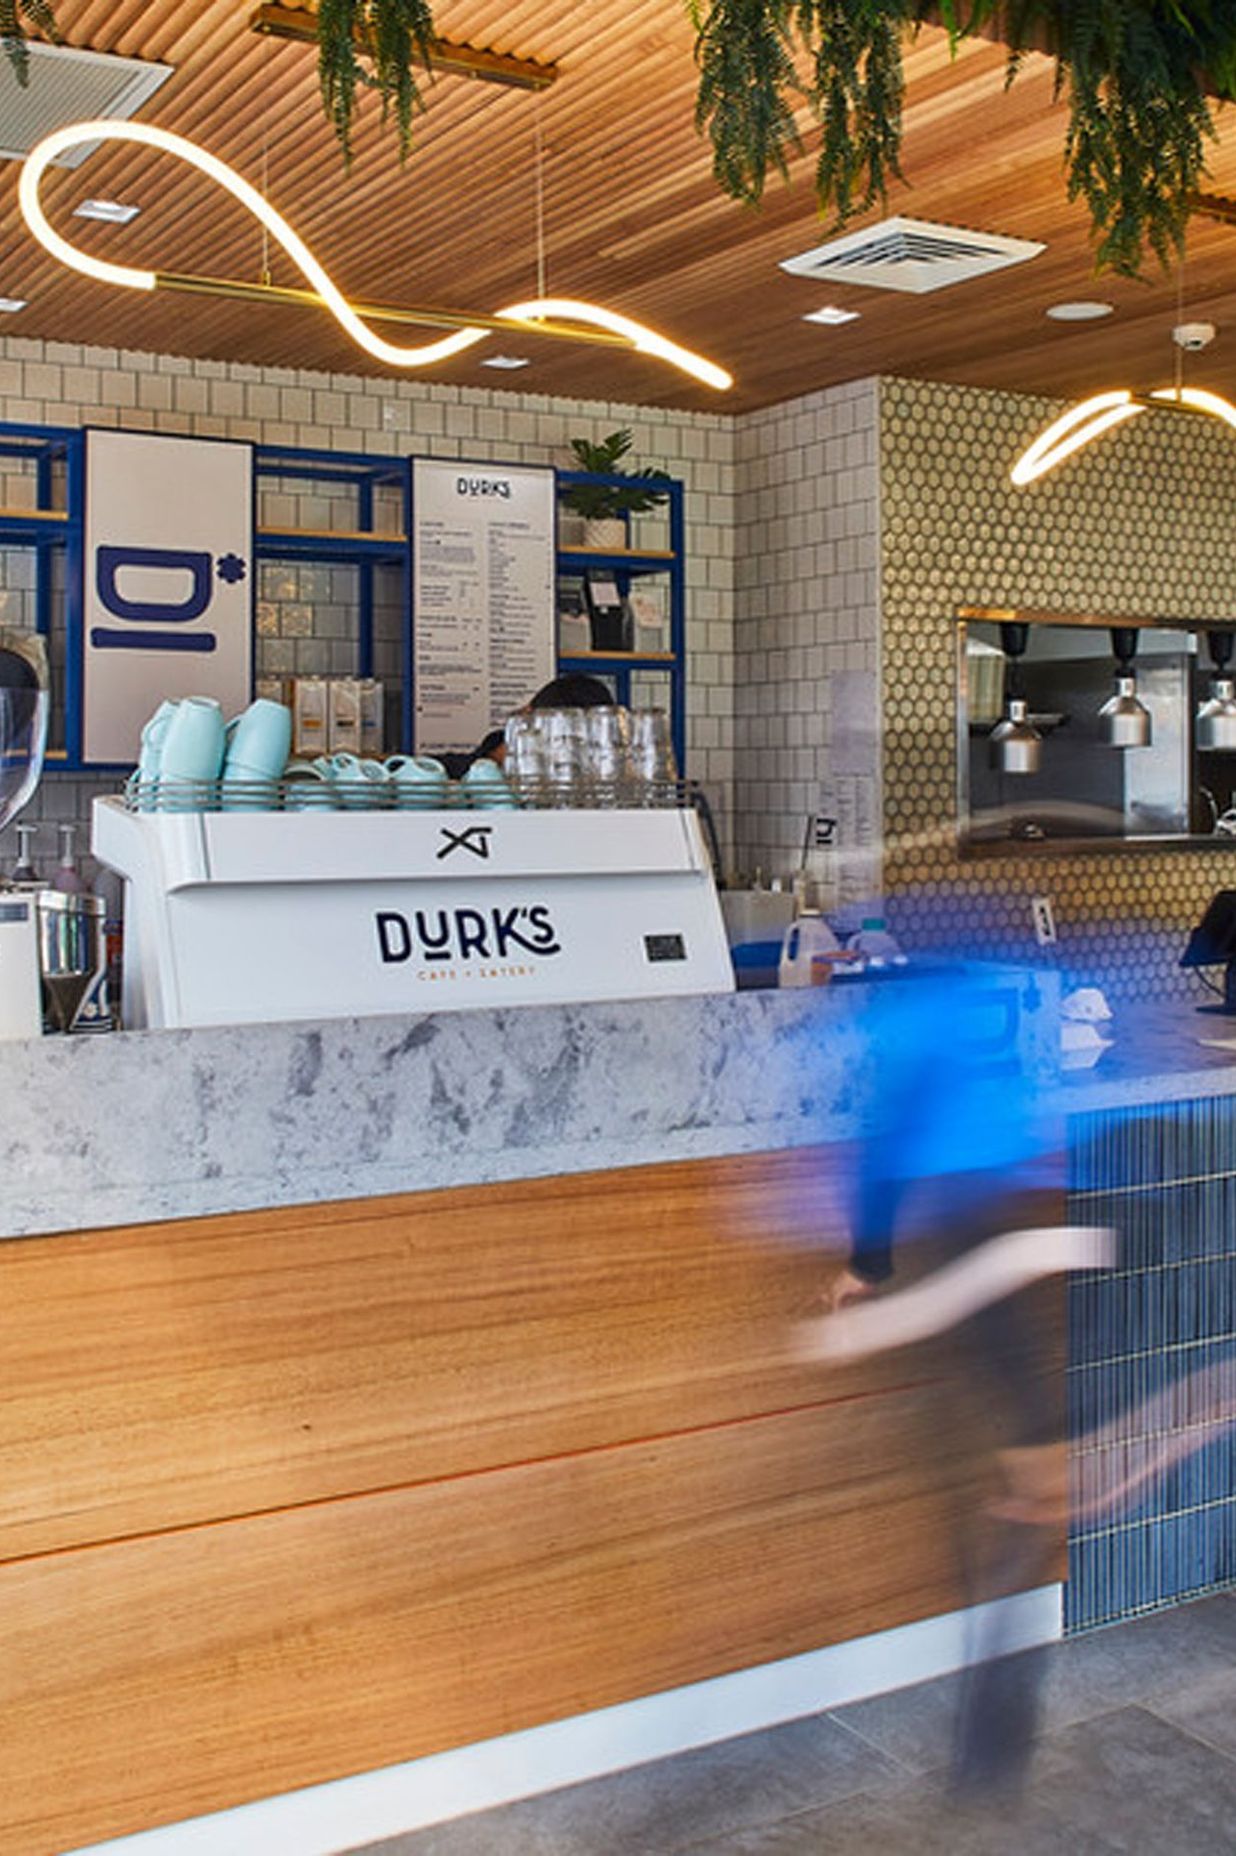  Durk's | Casula, NSW